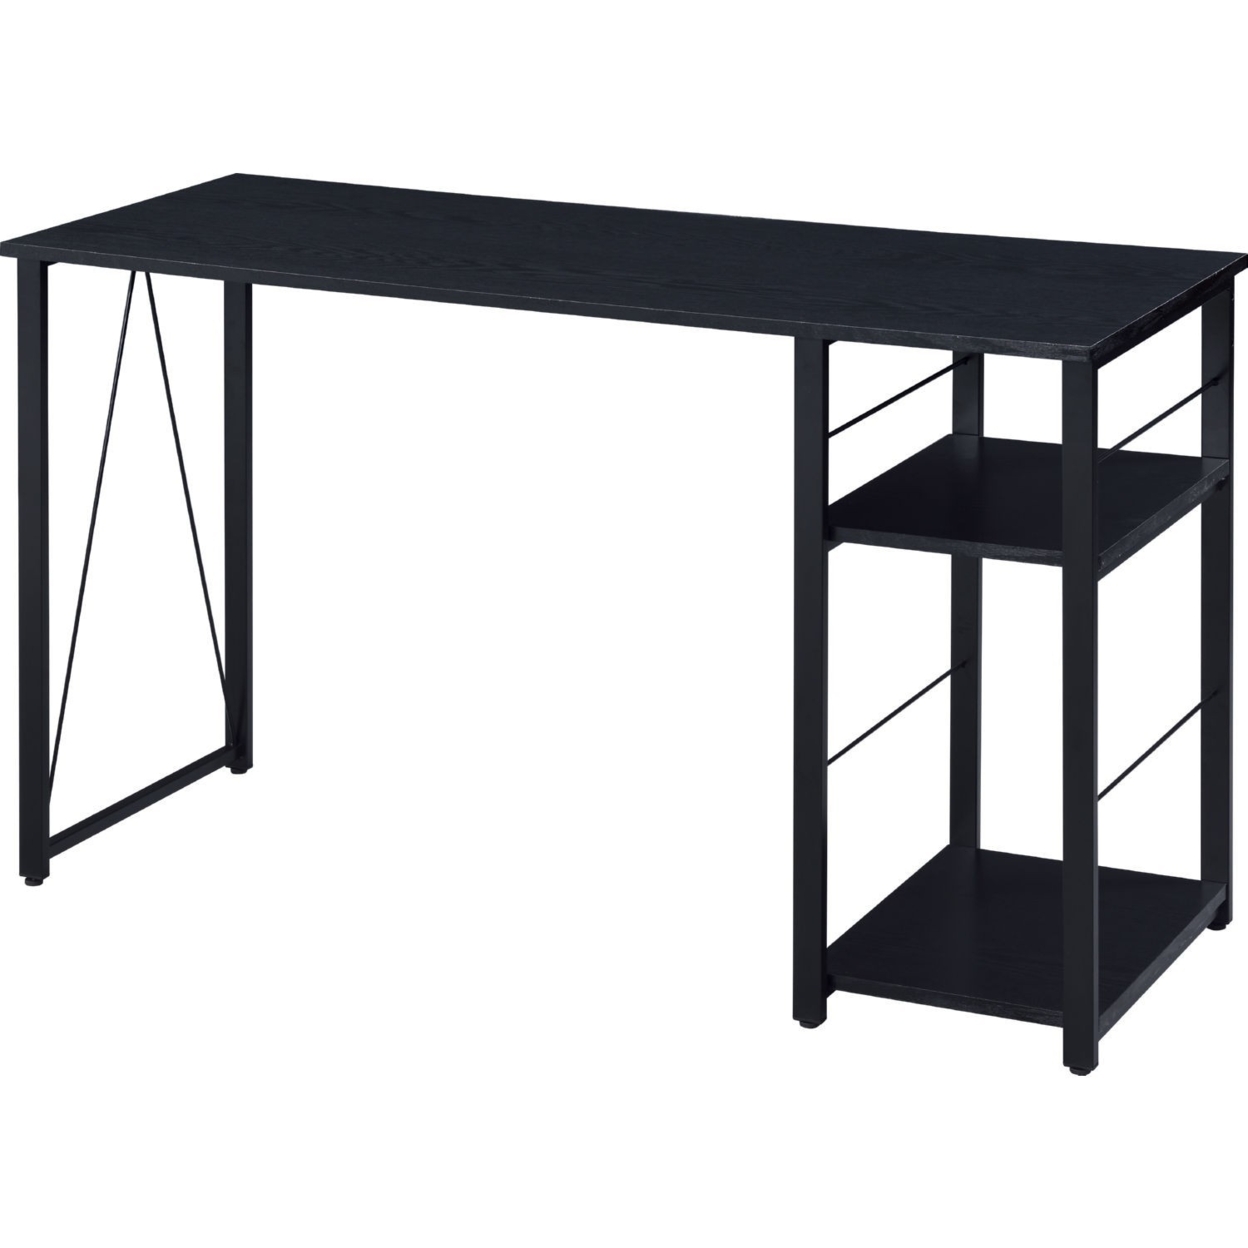 Writing Desk With 2 Tier Side Shelves And Tubular Metal Legs, Black- Saltoro Sherpi